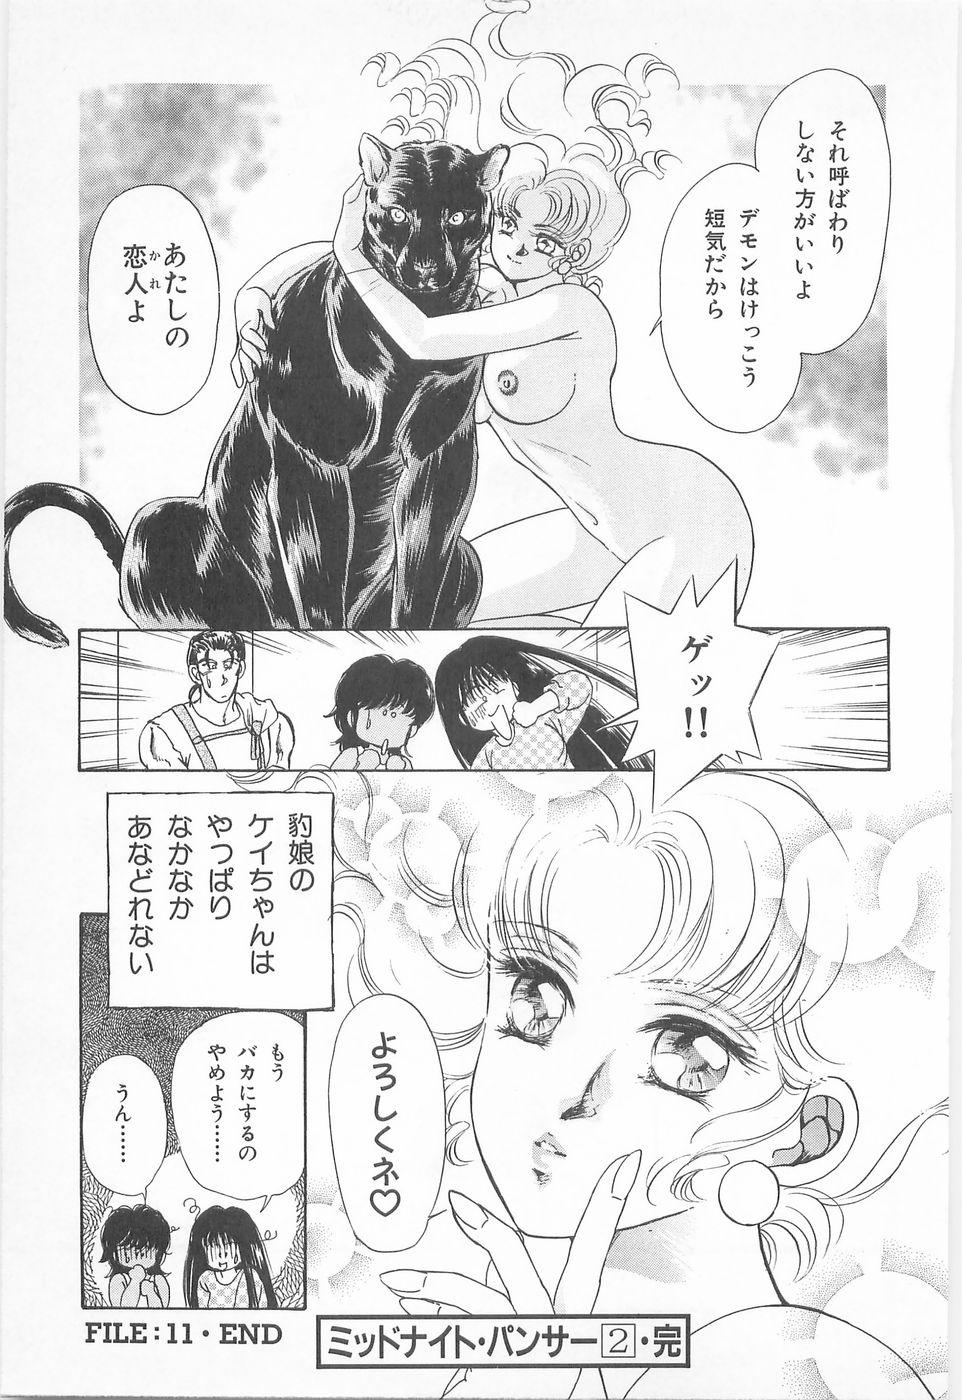 Midnight Panther Volume 2 JPN 160